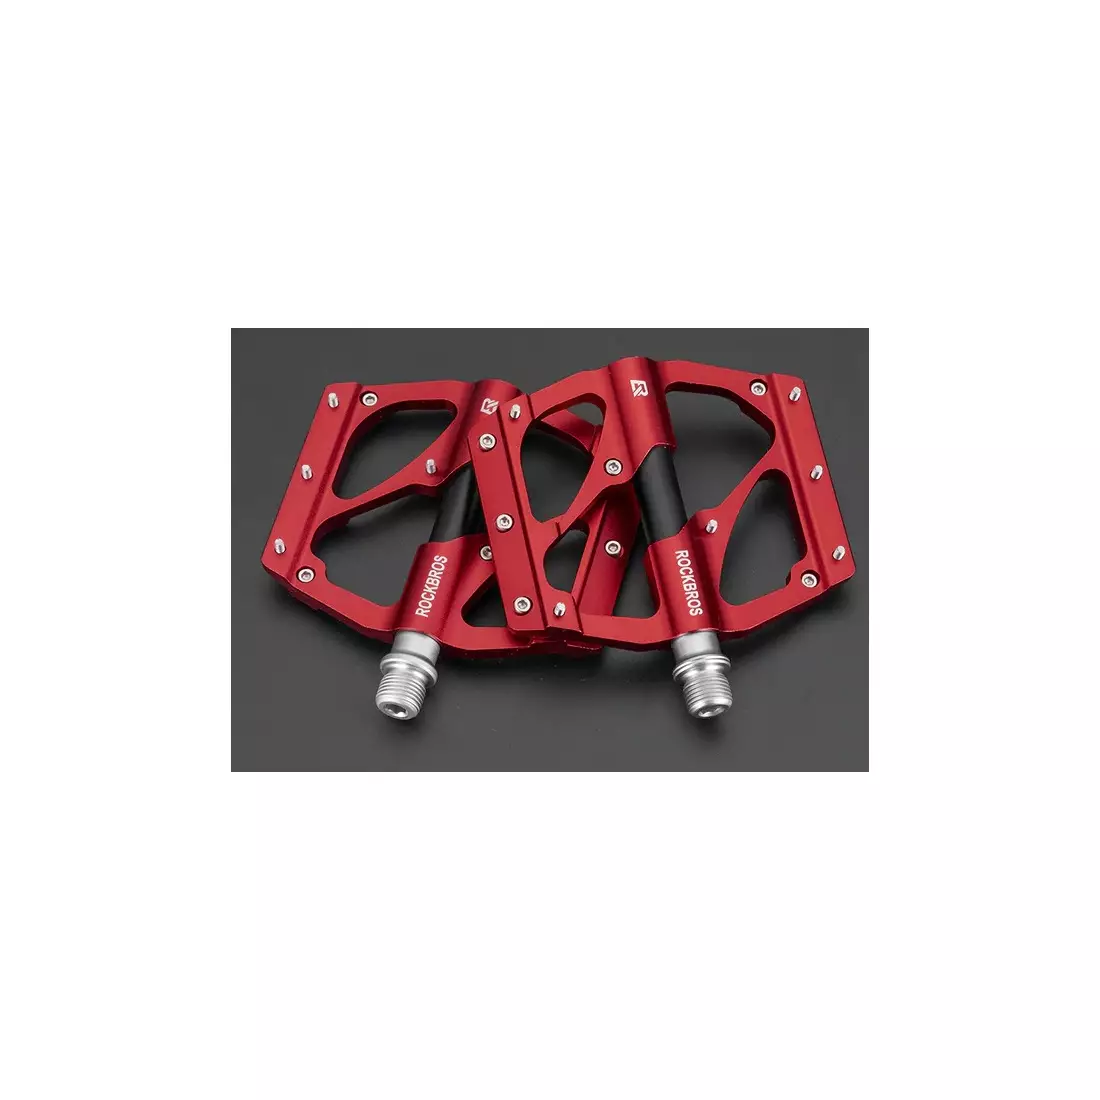 Rockbros platform pedals aluminium, red 2020-12BRD